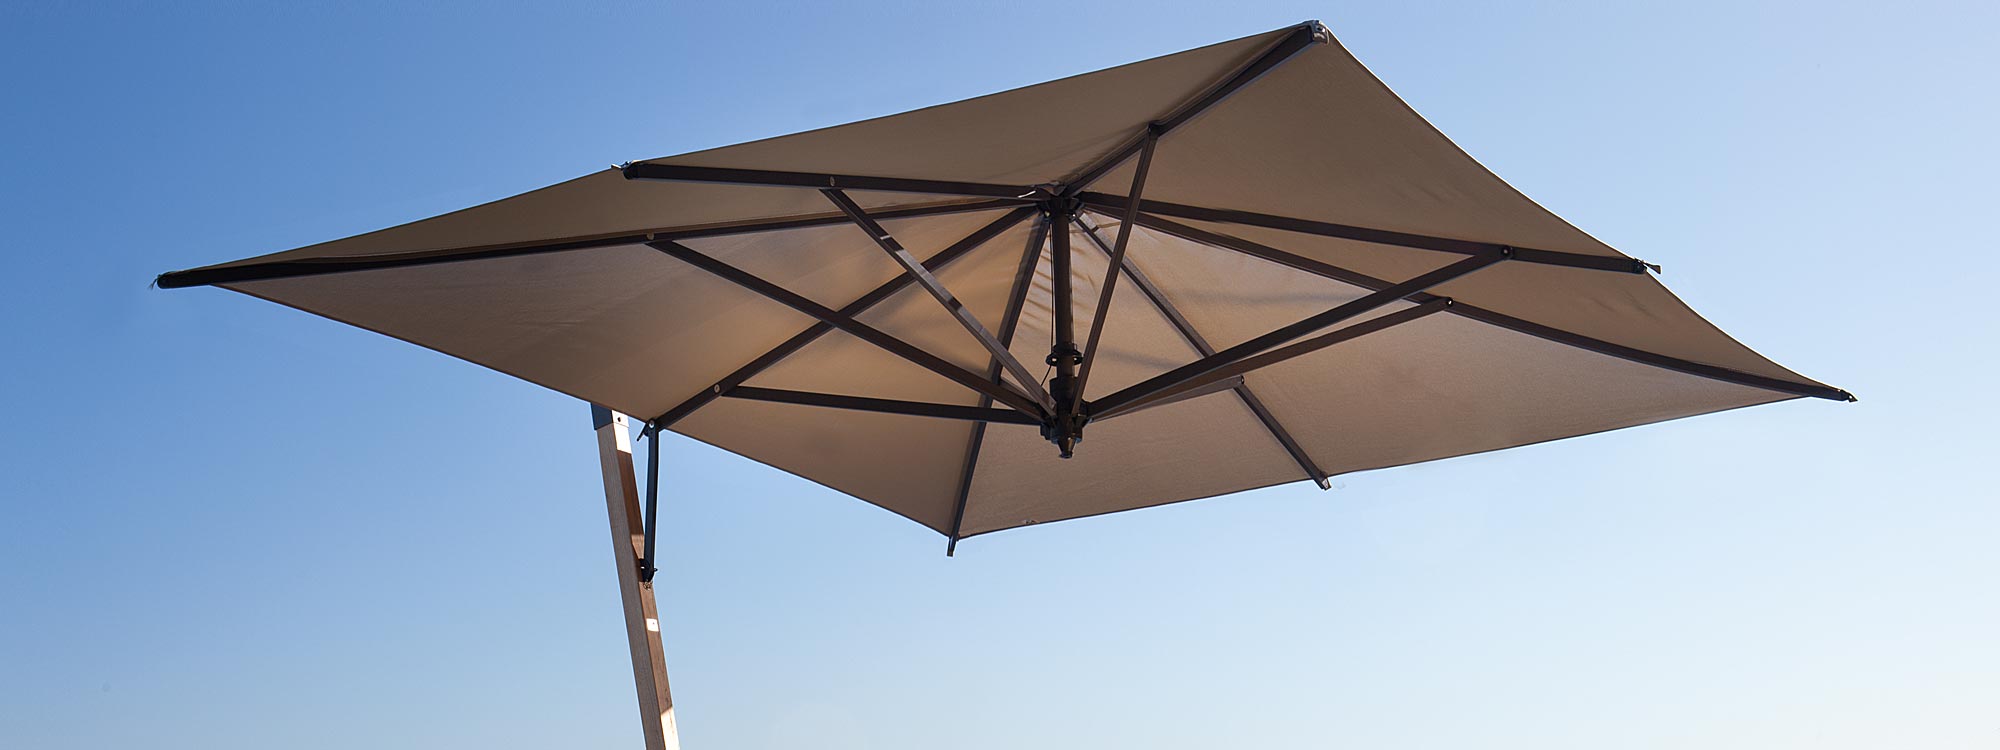 Capri cantilever parasol is a contemporary garden shade in high quality parasol materials by FIM Italian sunshade company.